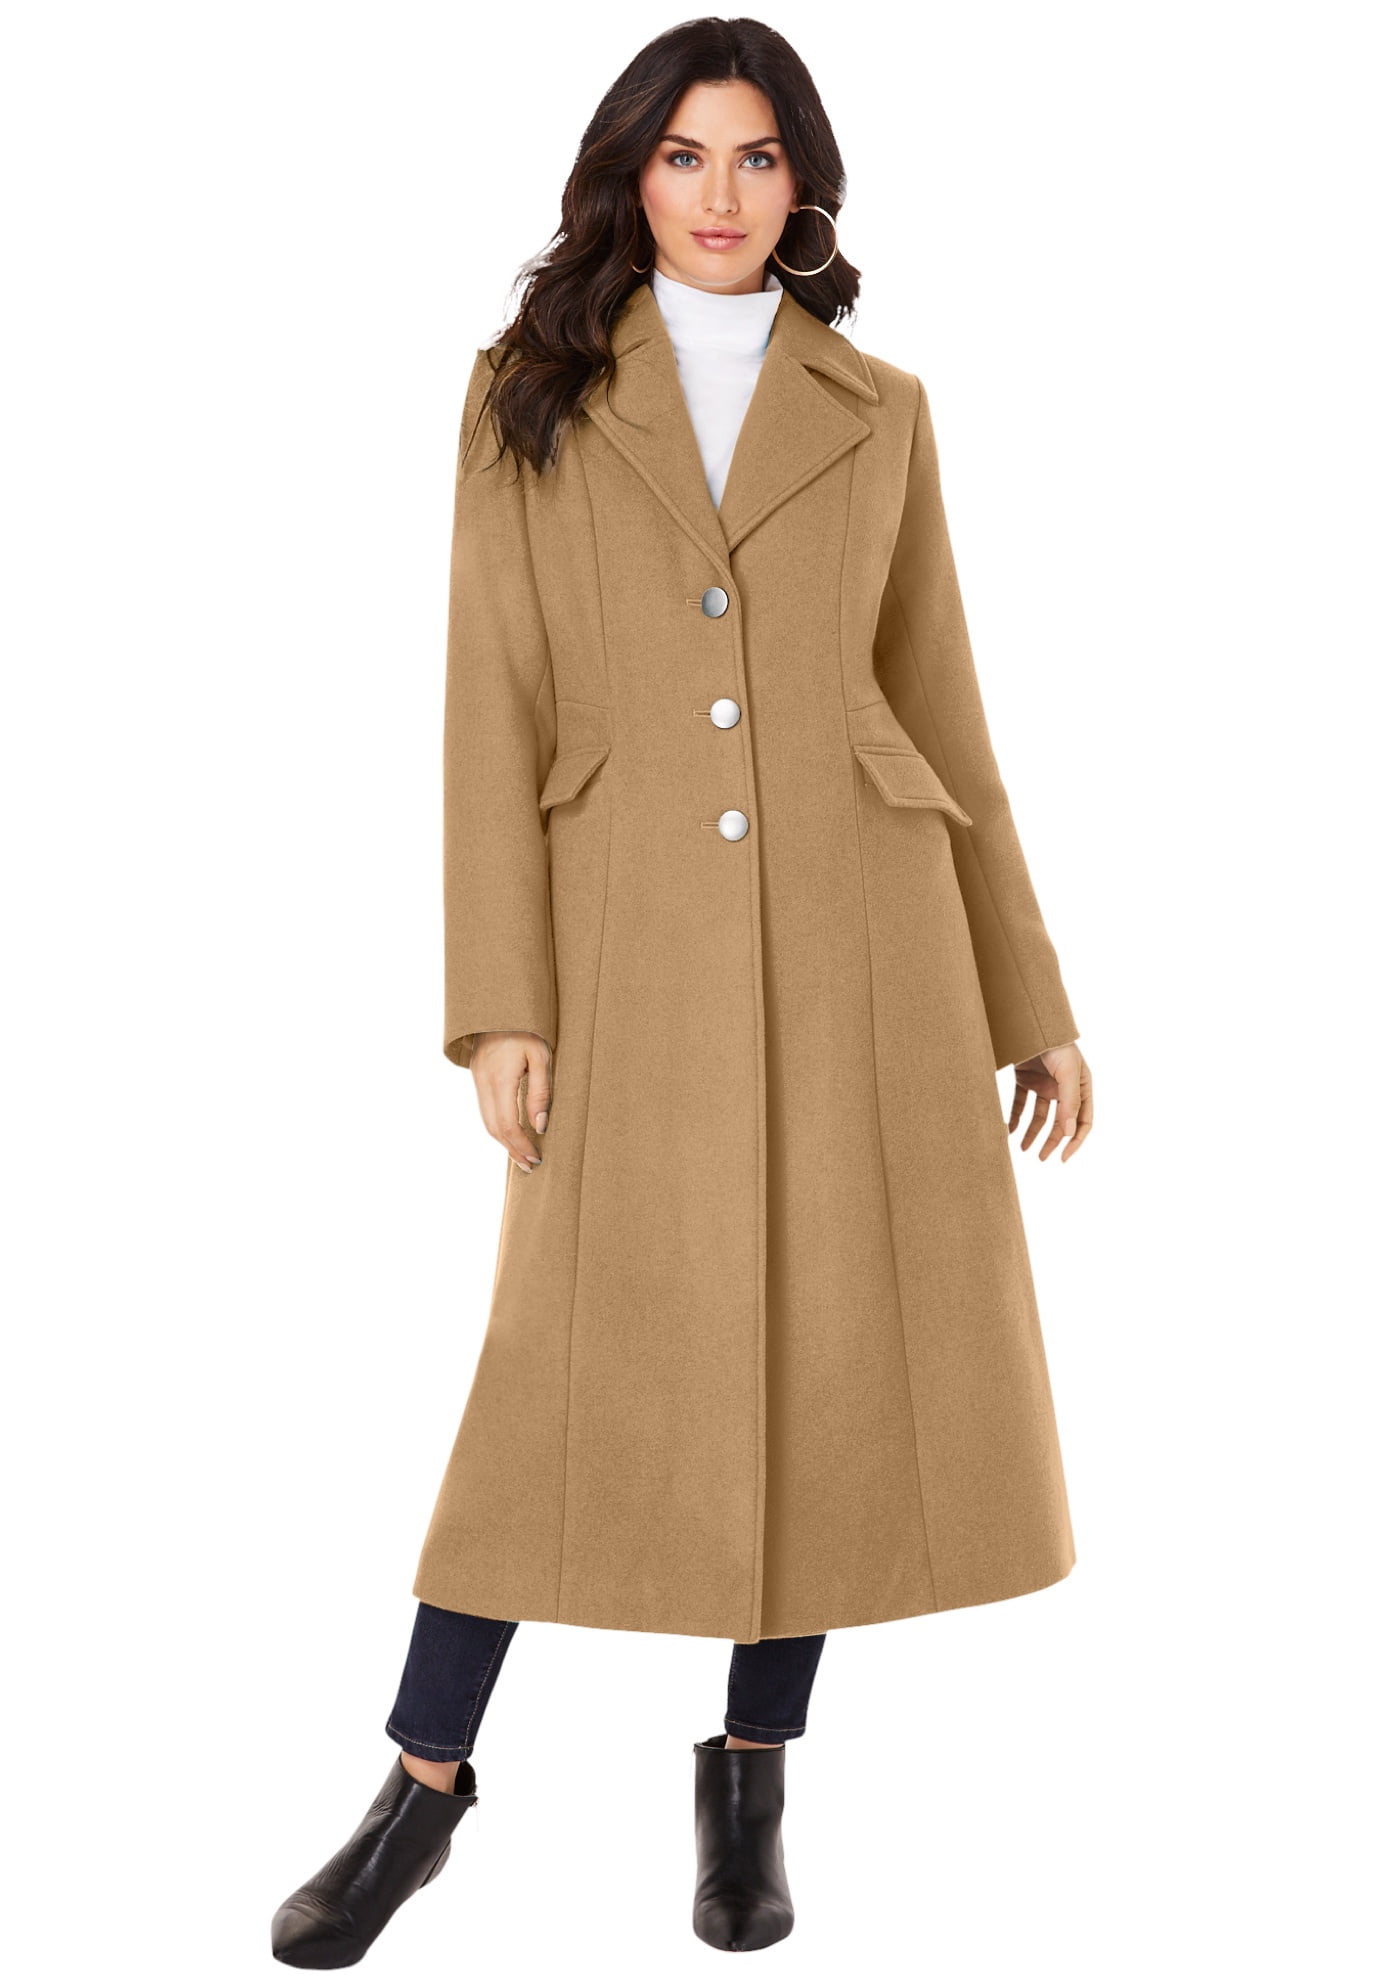 Coat solid button women's coat loose warm wool coat hooded fashion Autumn/winter